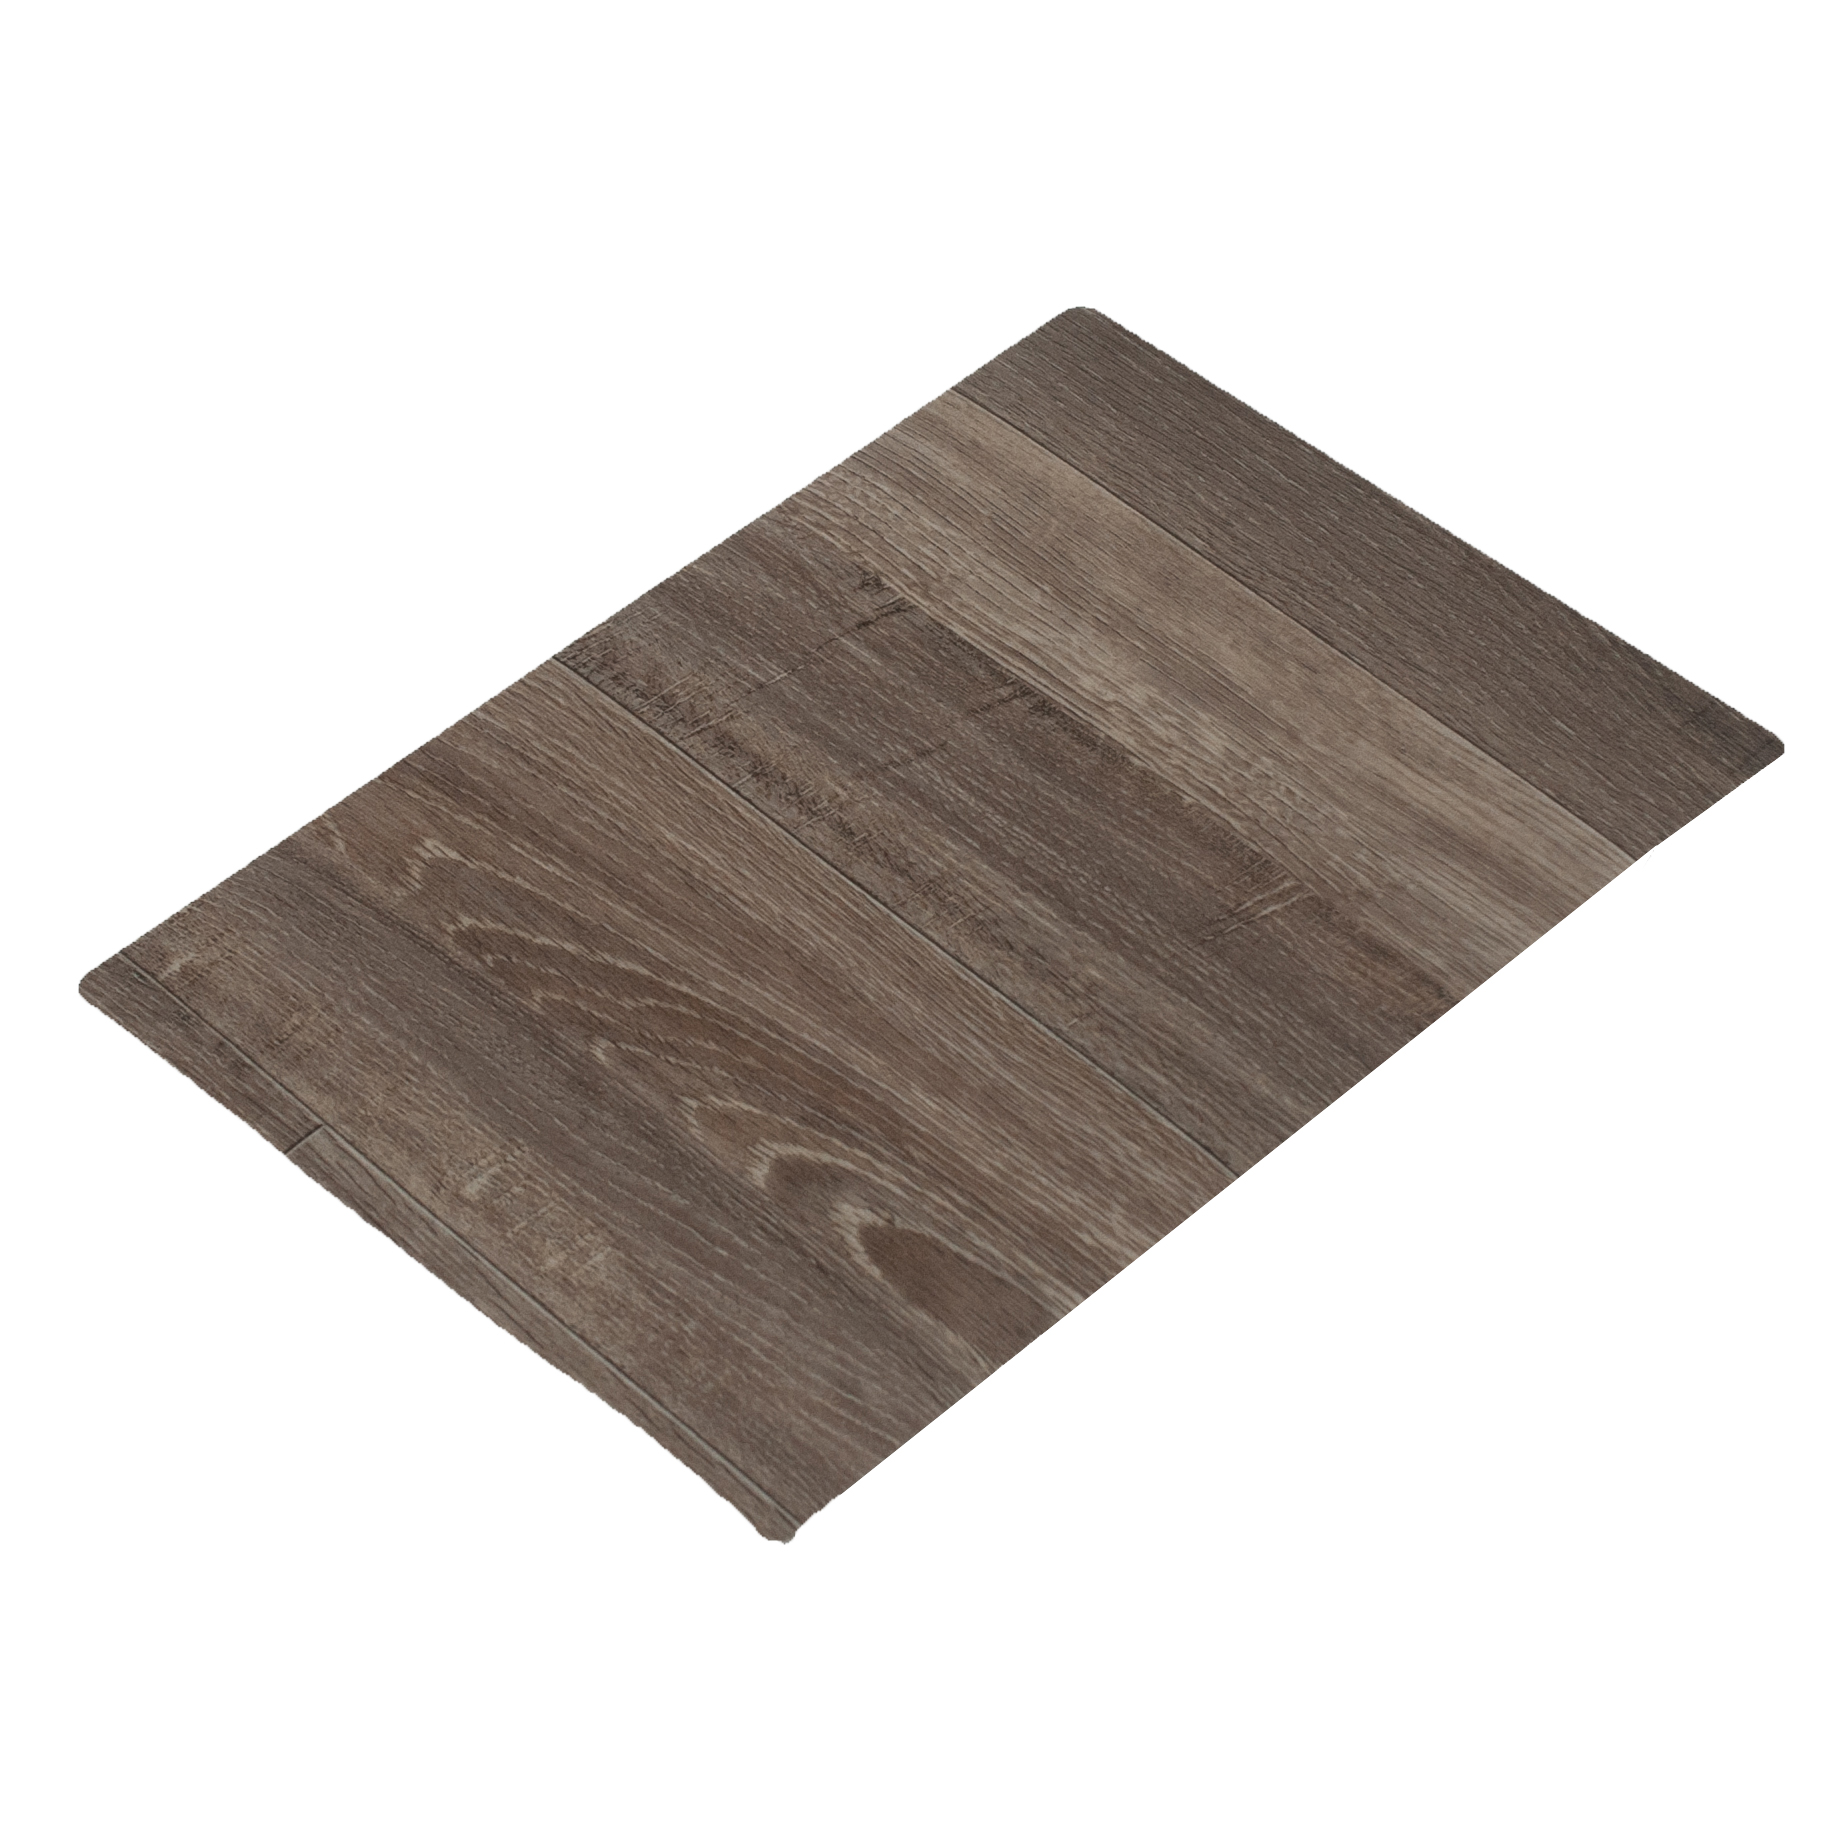 Textured Standard Size PVC Flooring For Basement